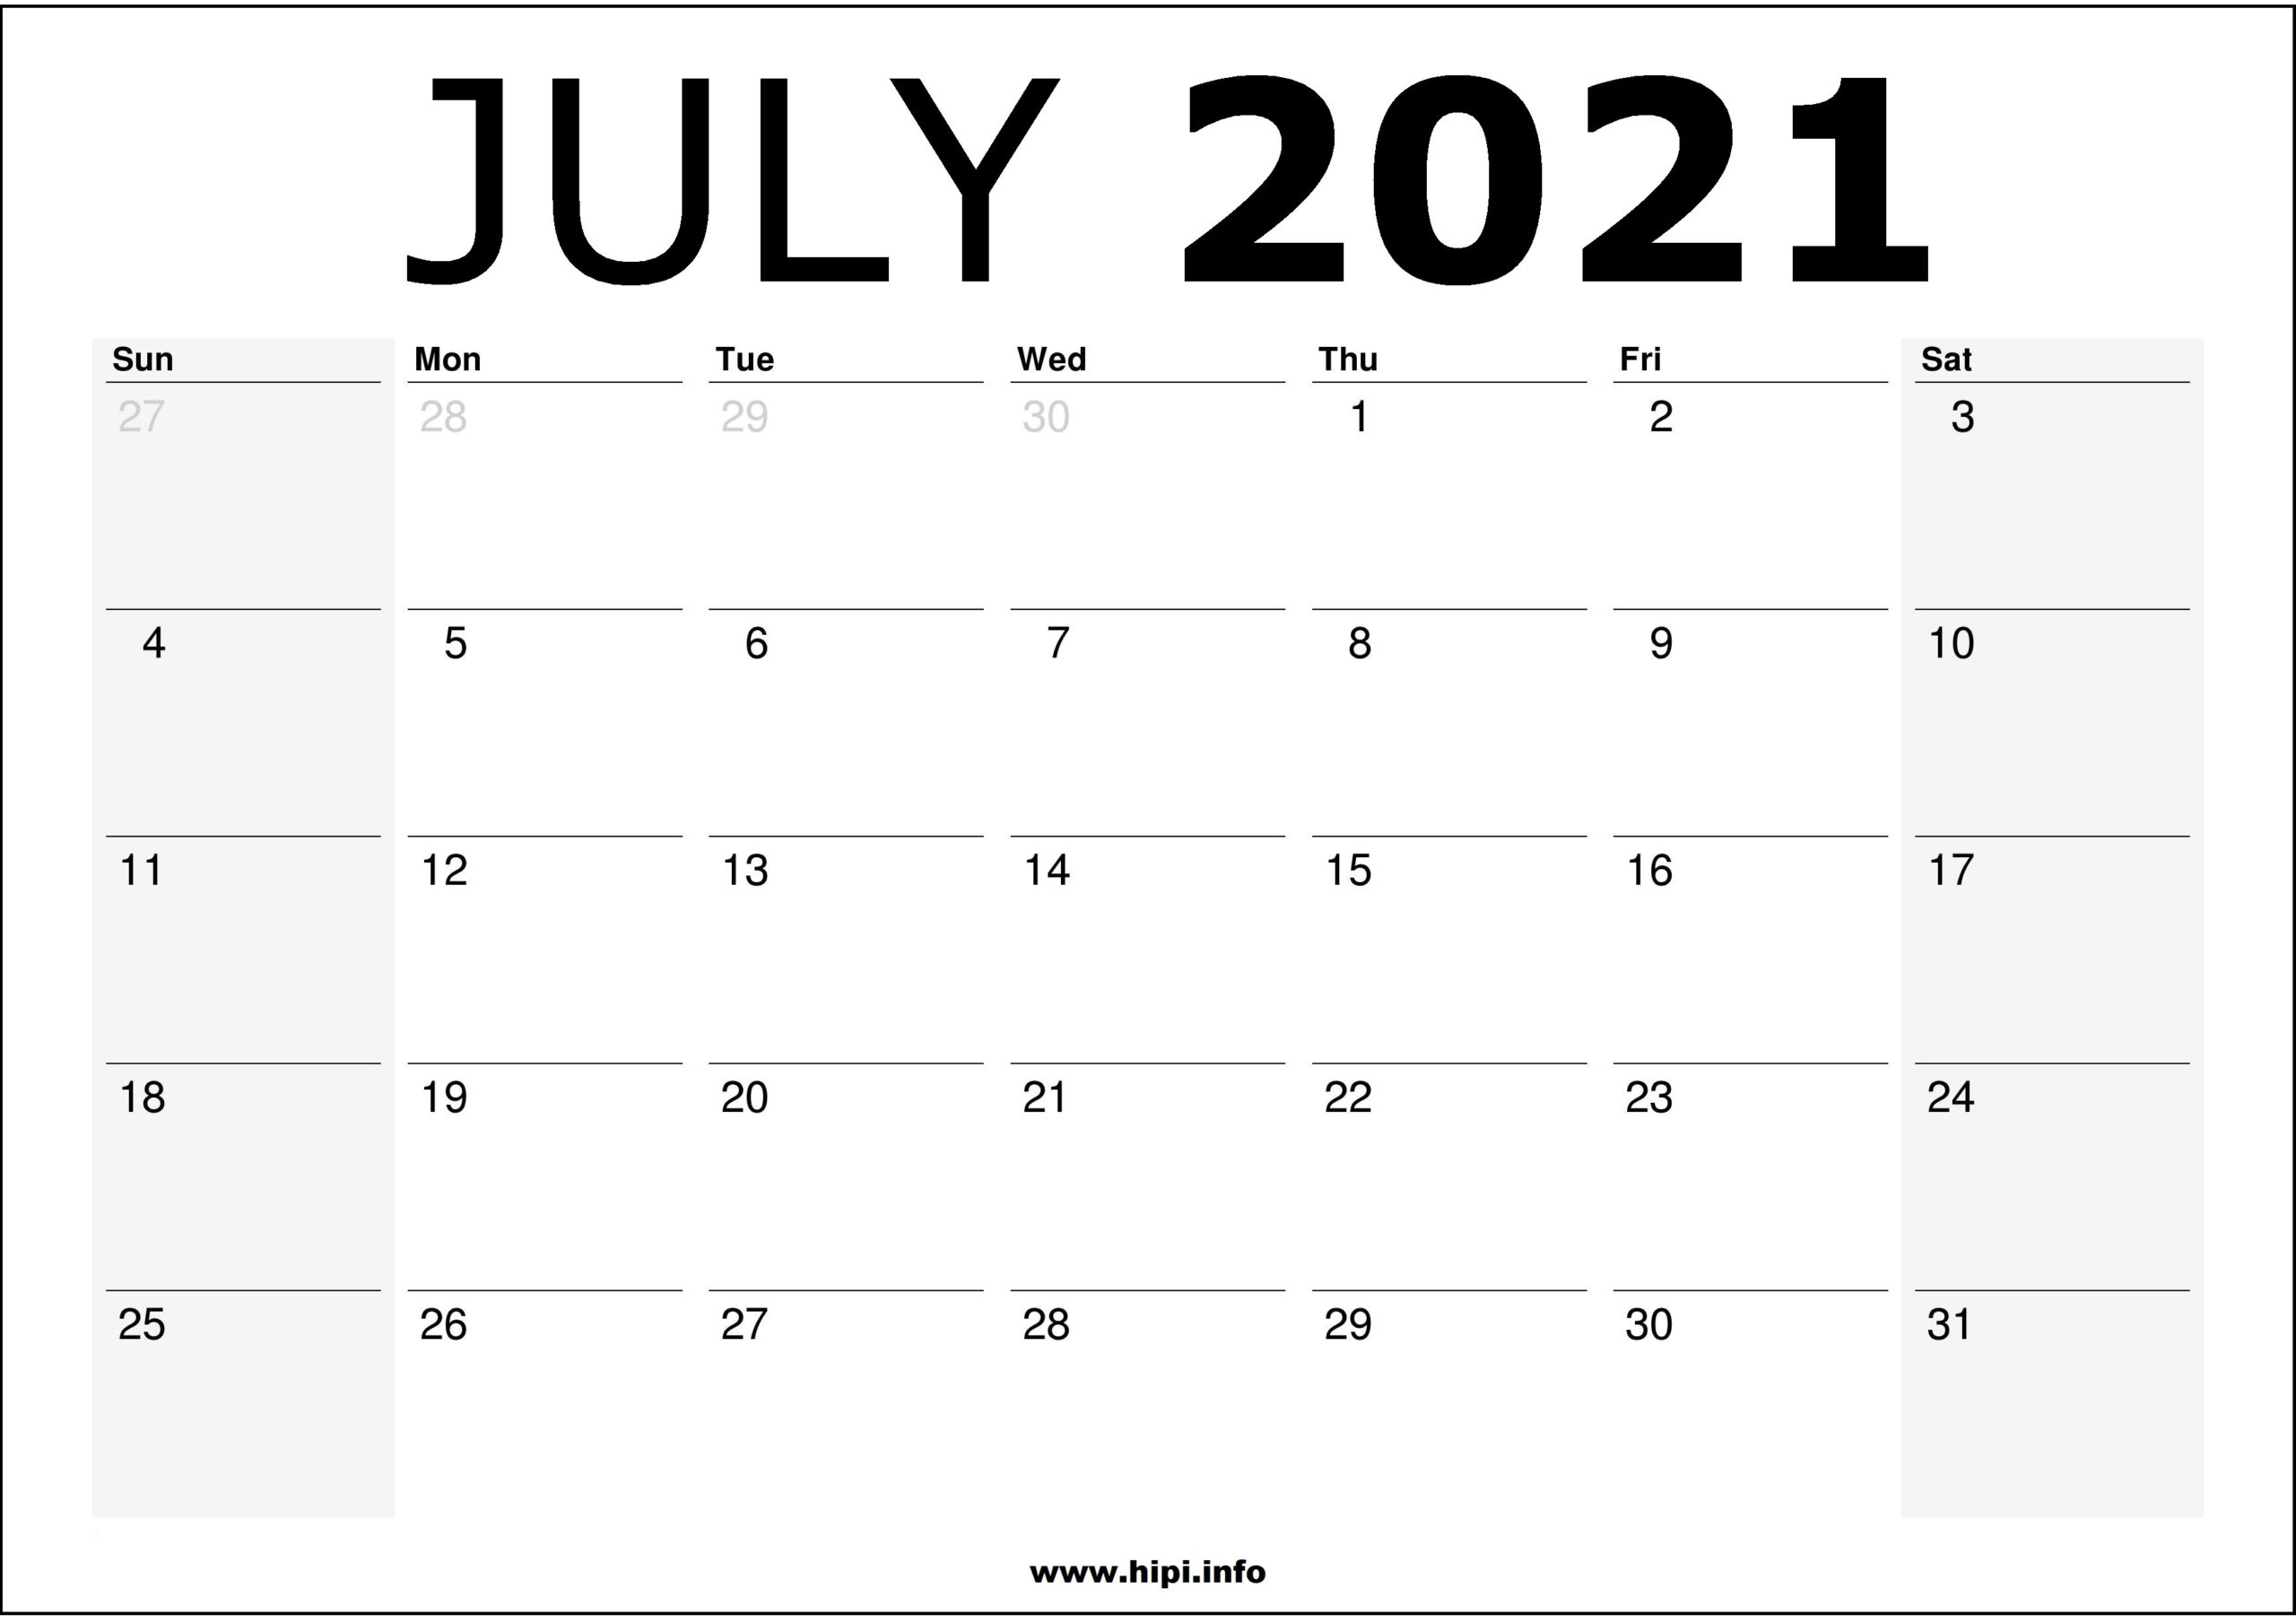 July 2021 Calendar Printable Monthly Calendar Free Download Hipi